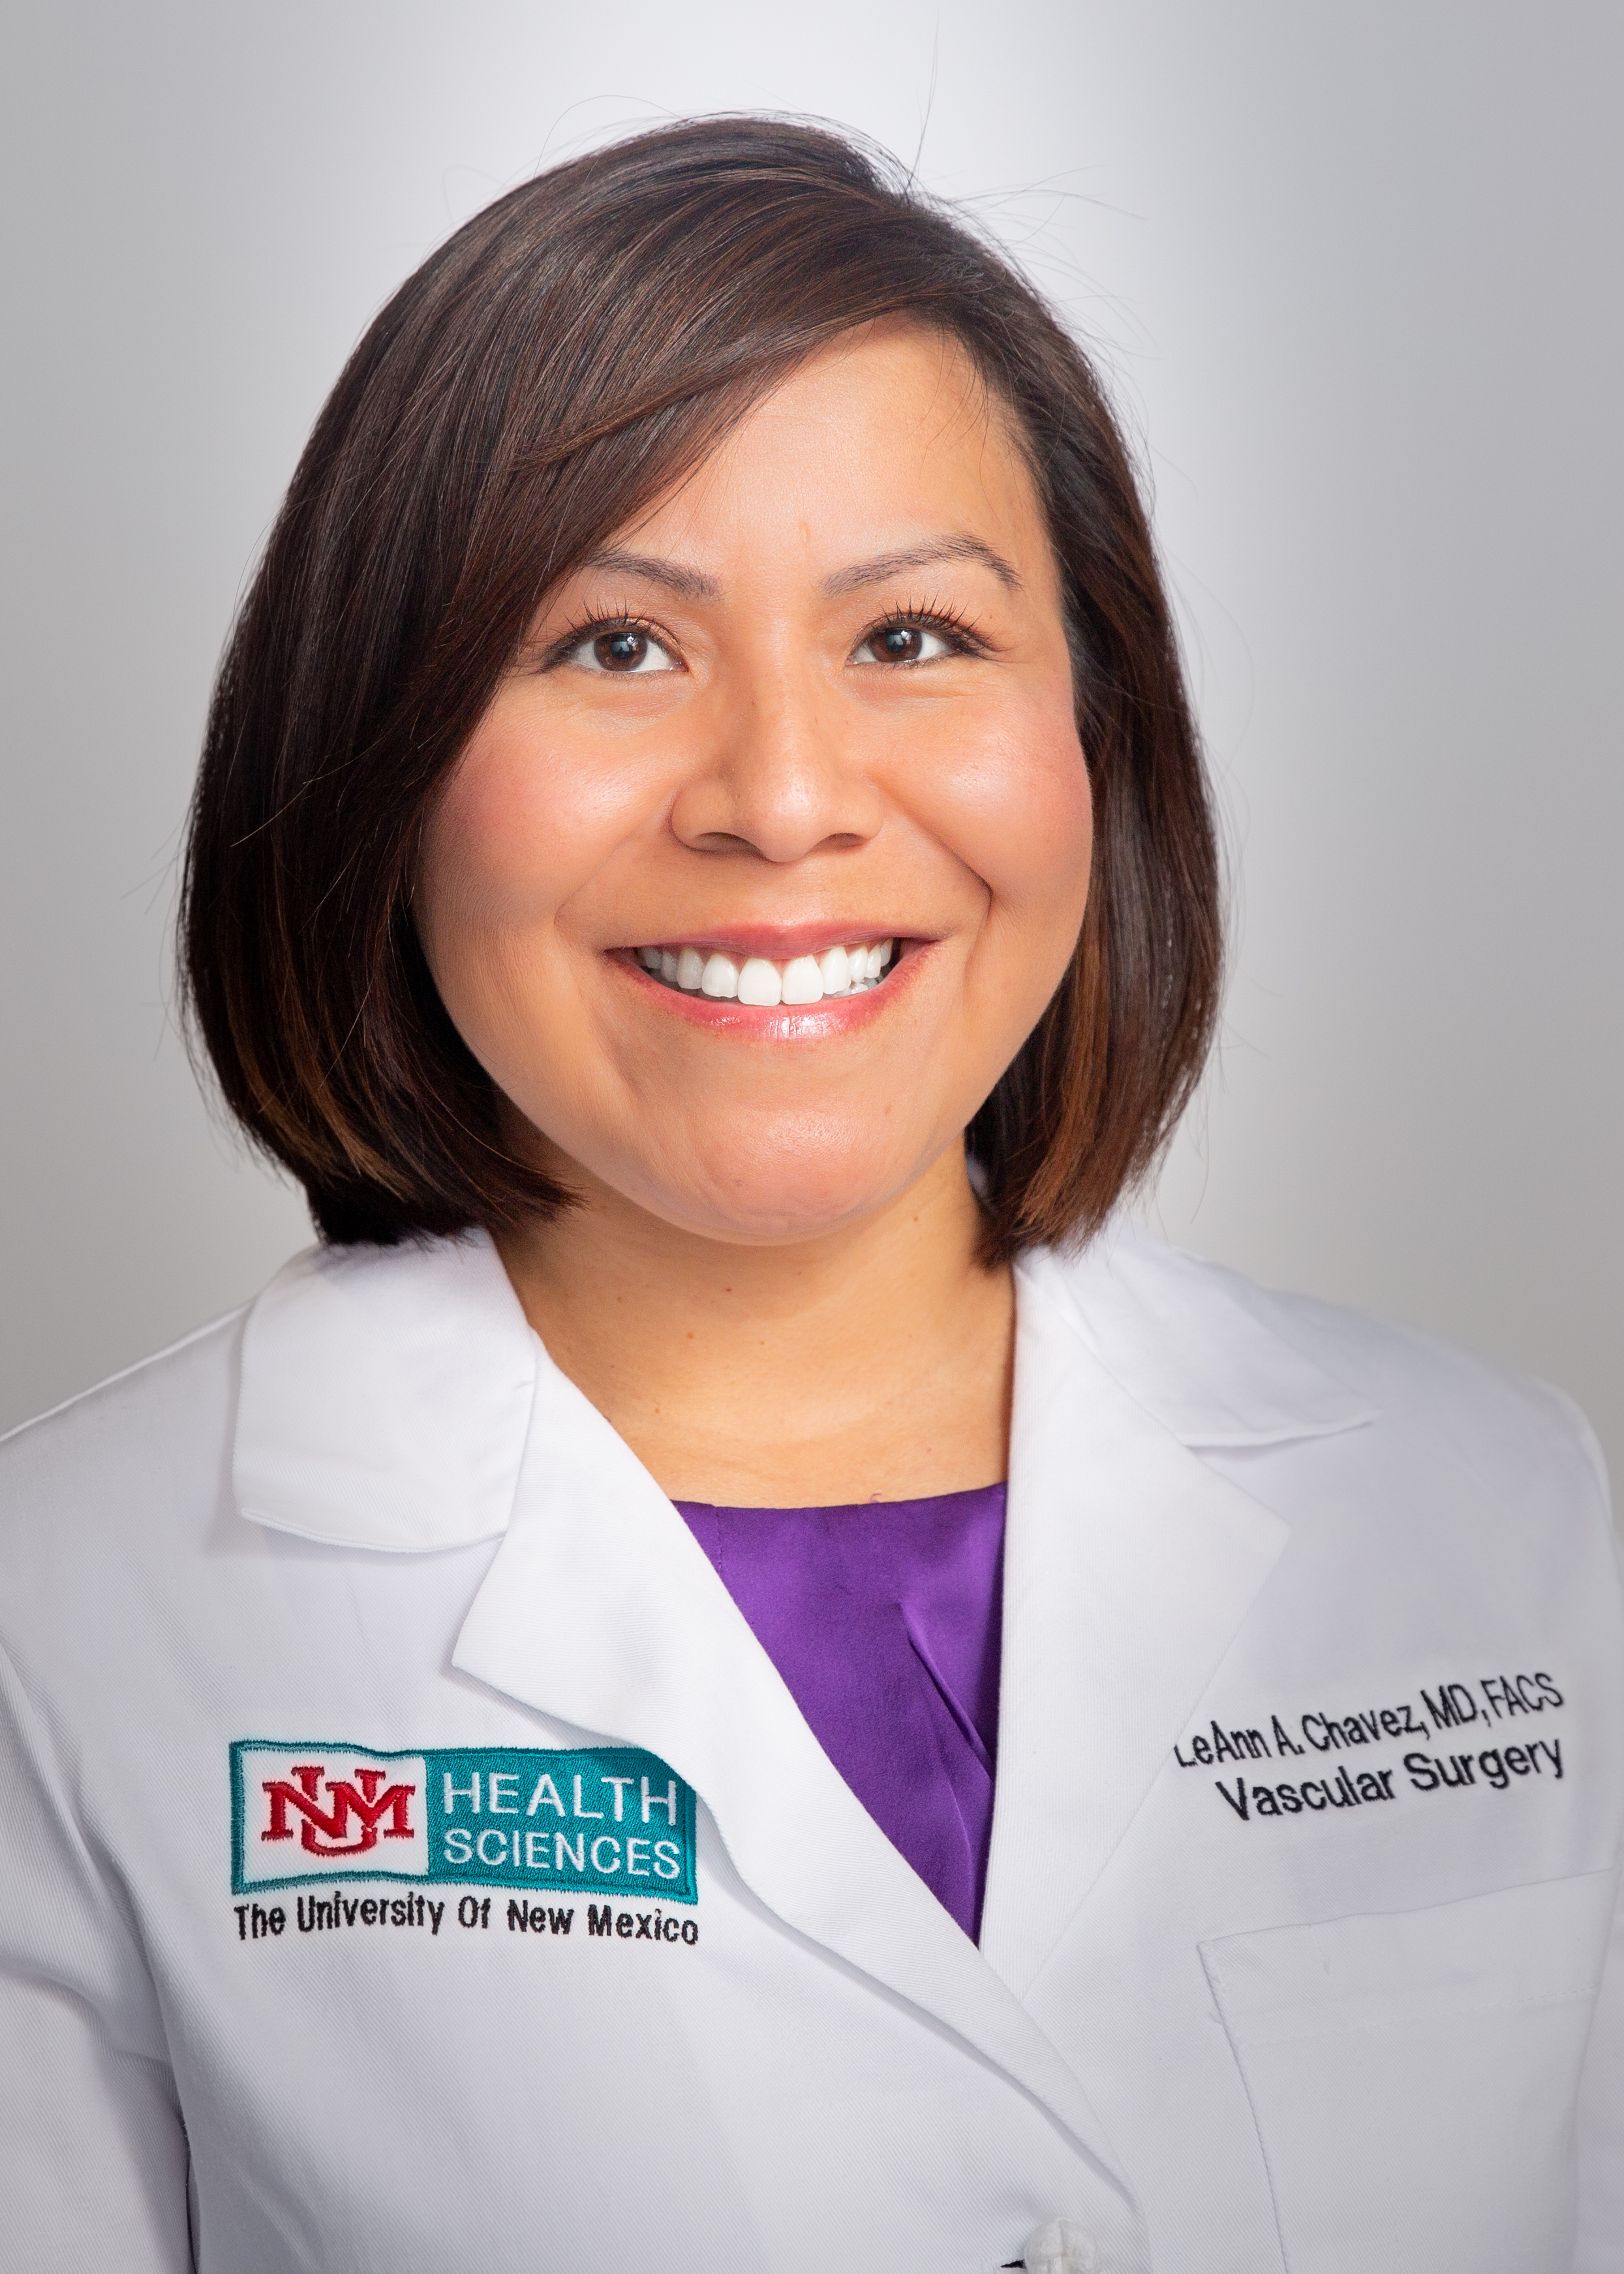 Leann Chavez, dottore in medicina